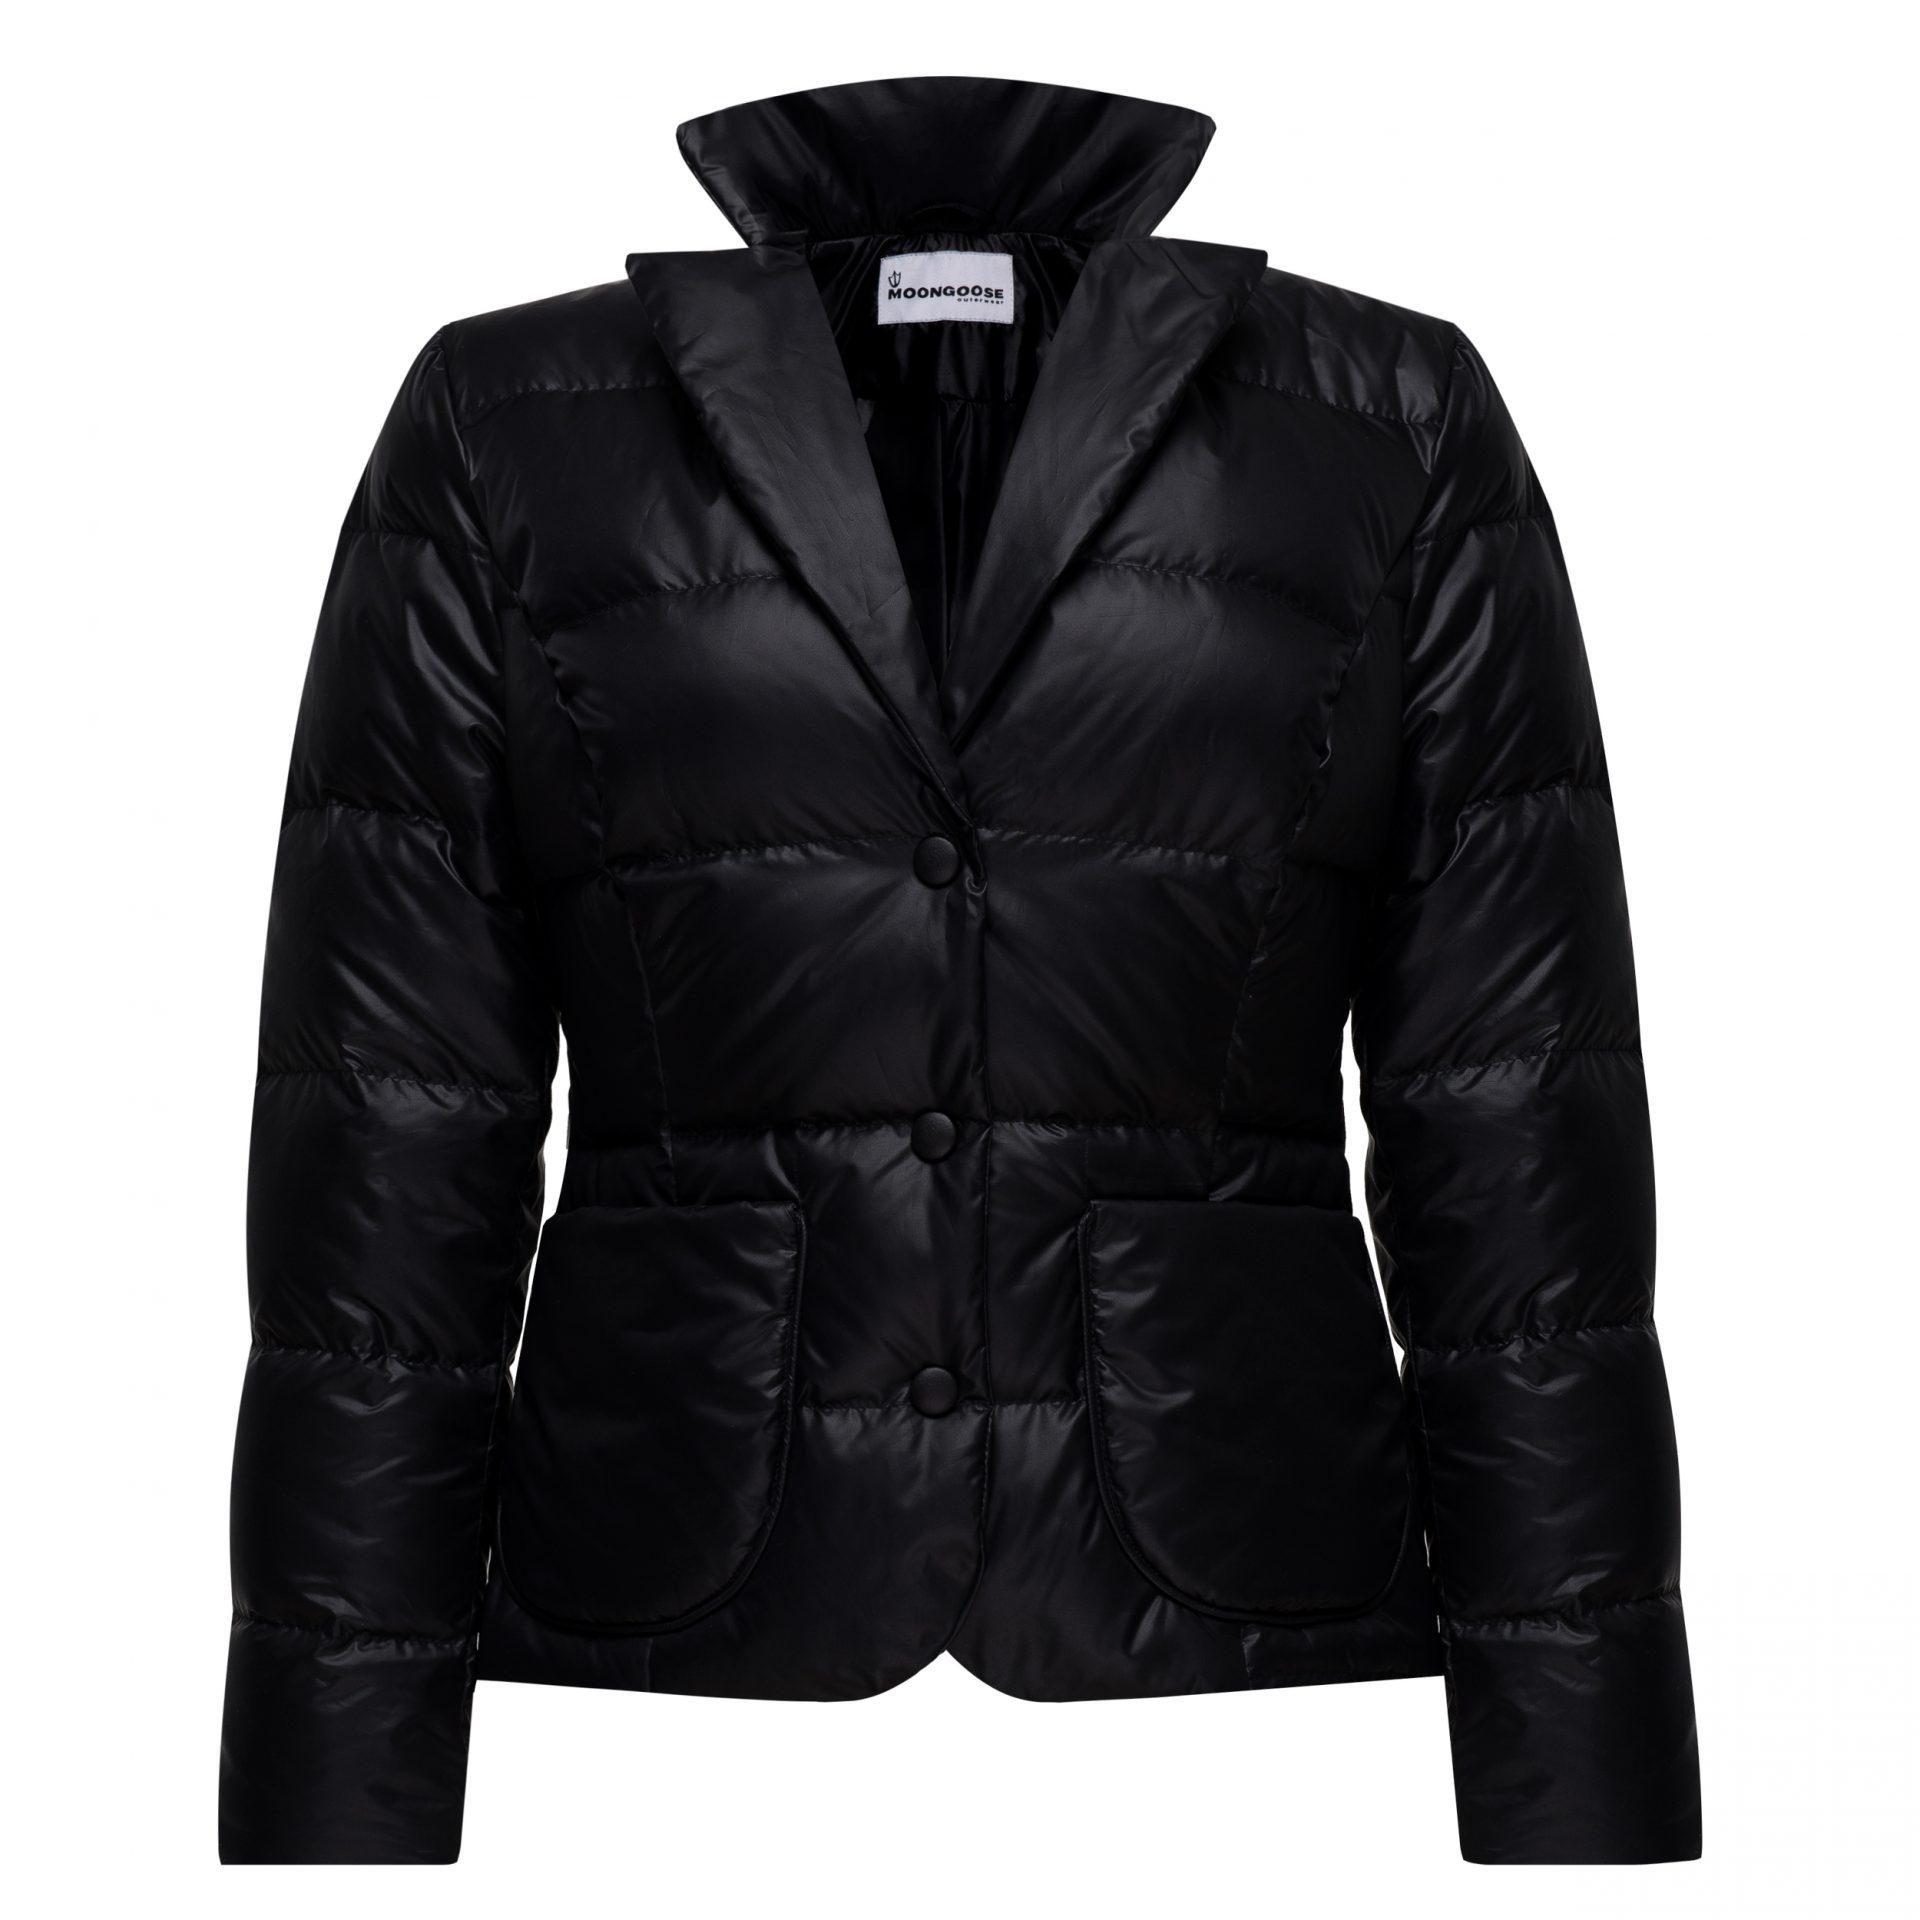 Women’s jacket Allure black night